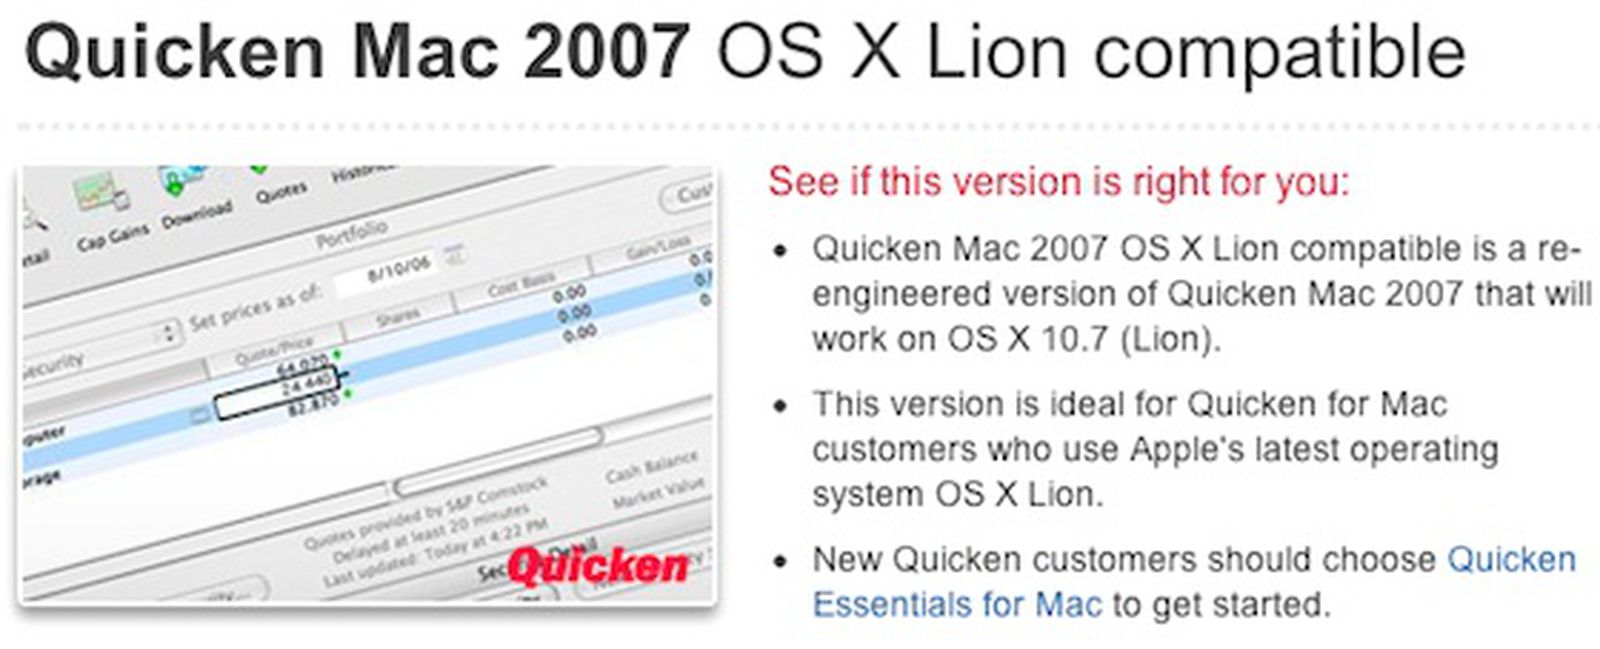 microsoft office 2008 lion compatibility